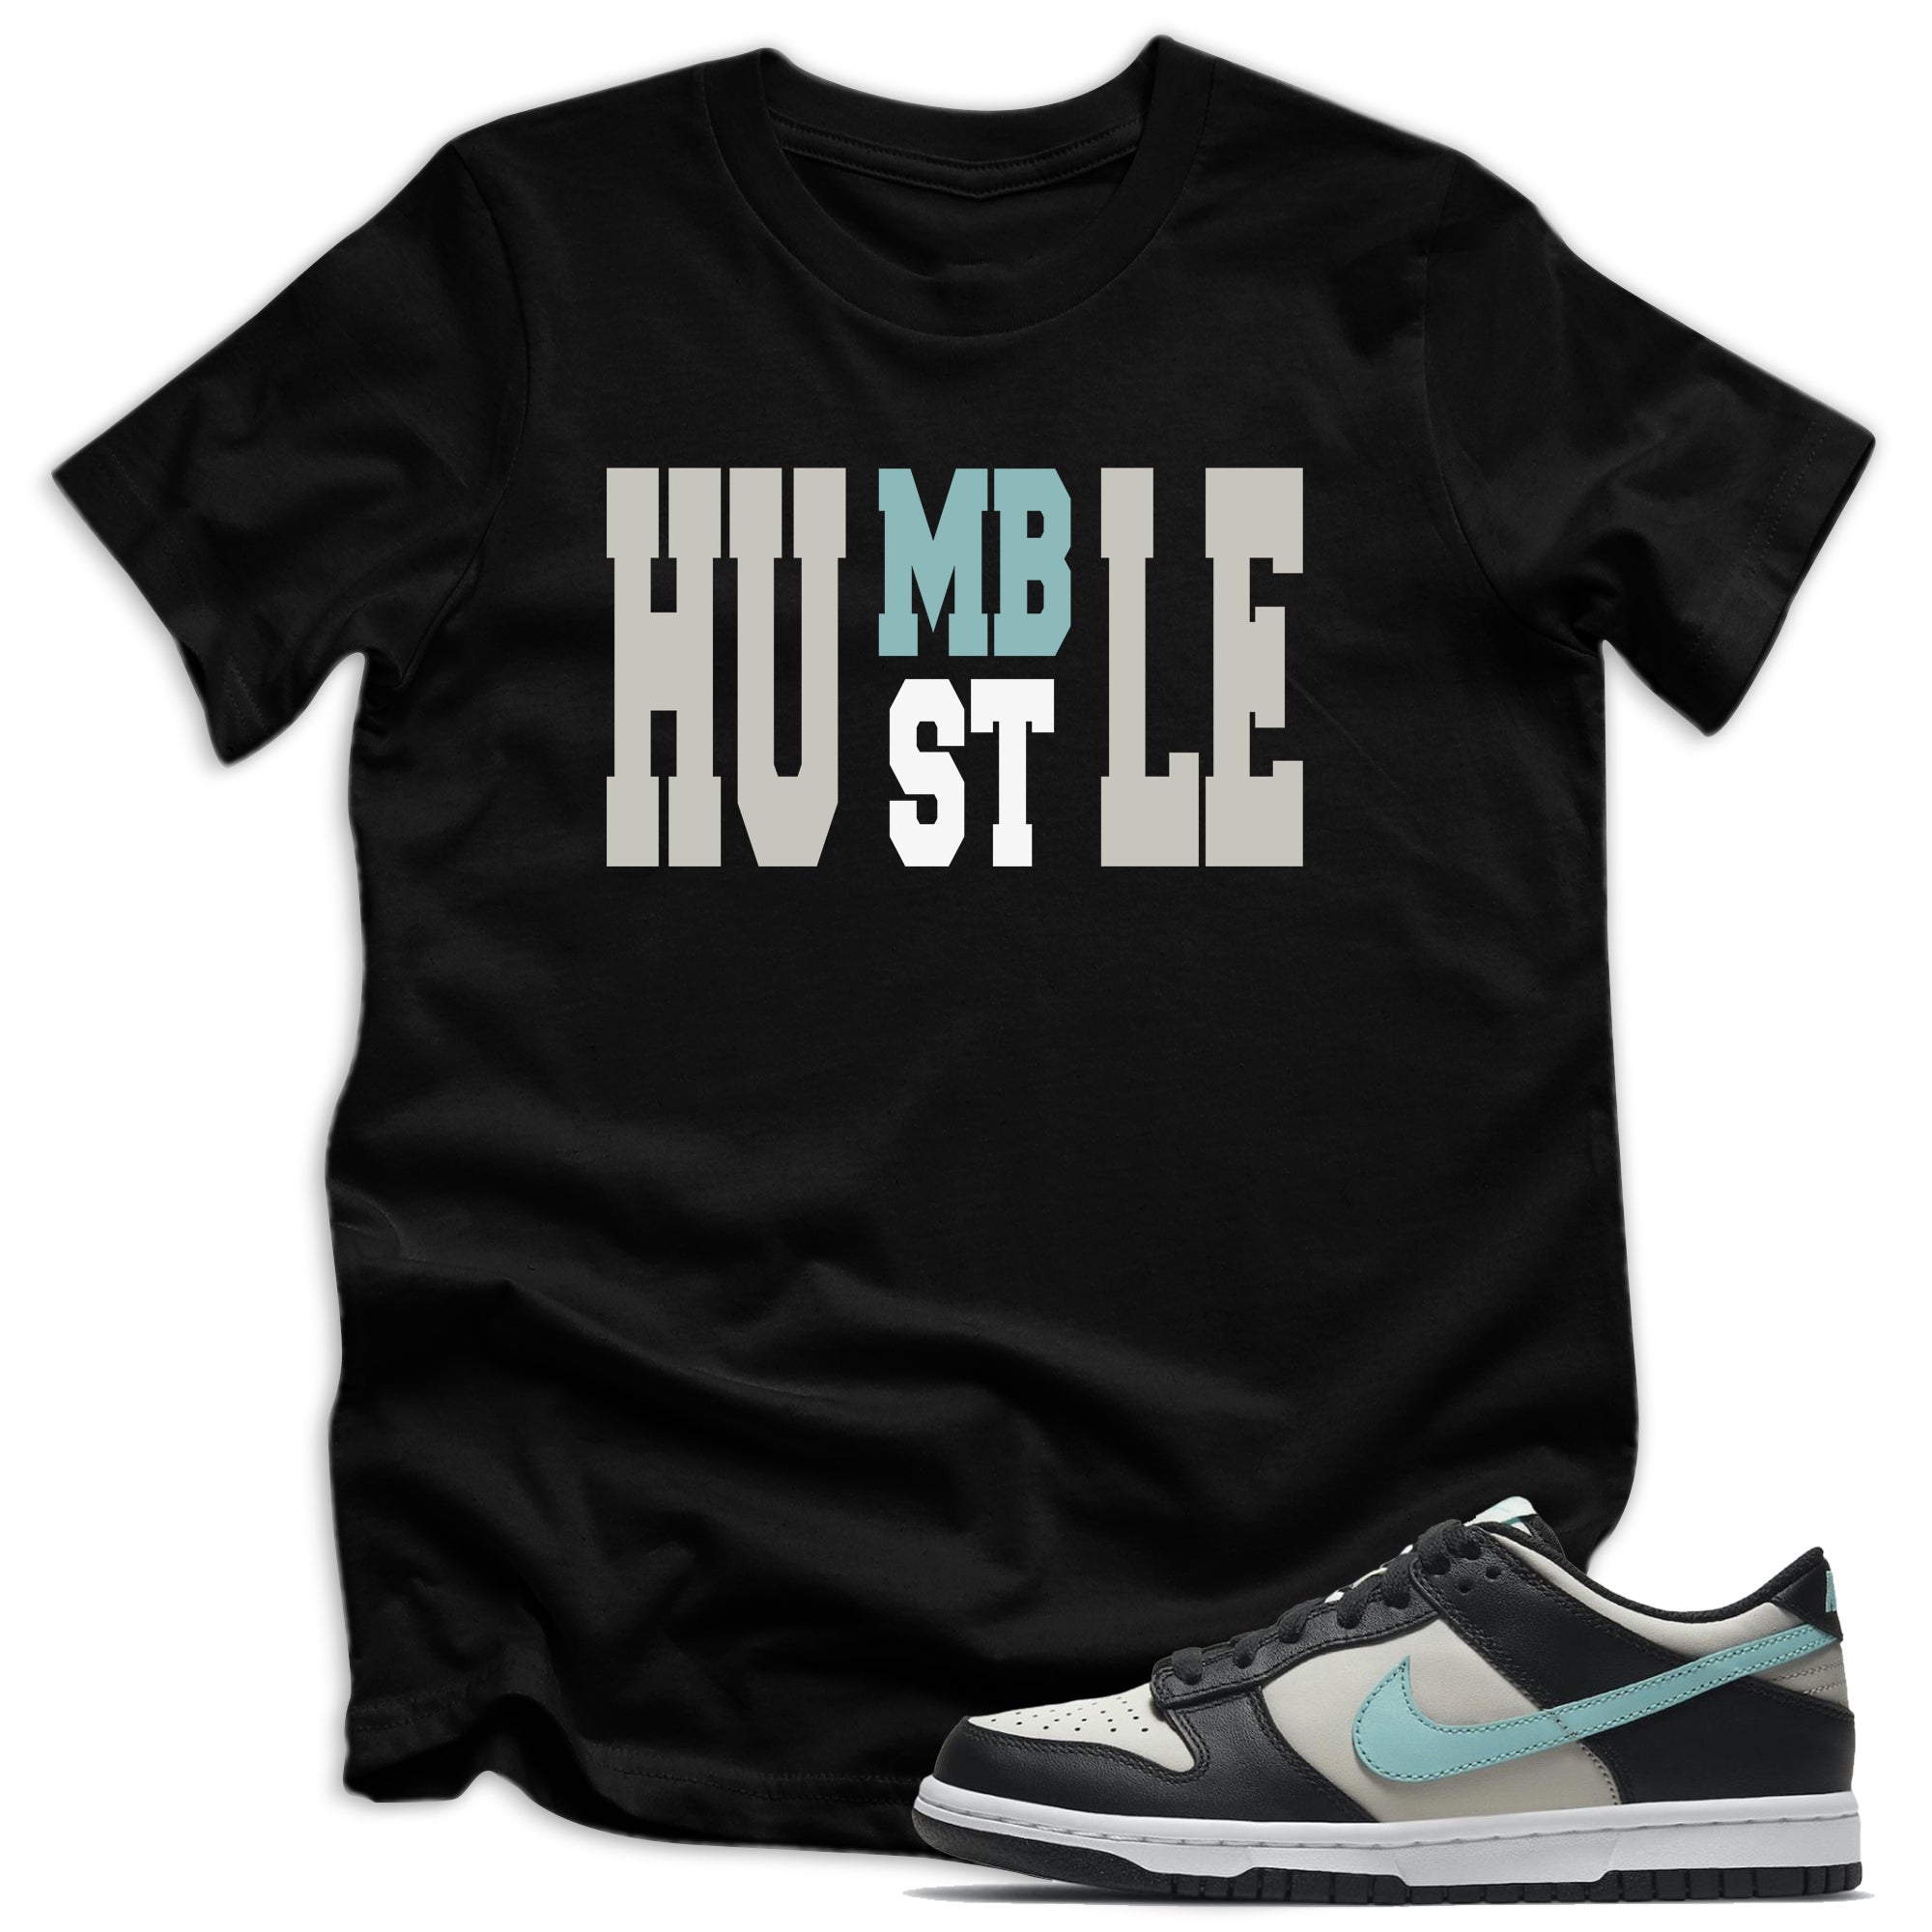 Humble Hustle Shirt Nike Dunk Low Tropical Twist photo